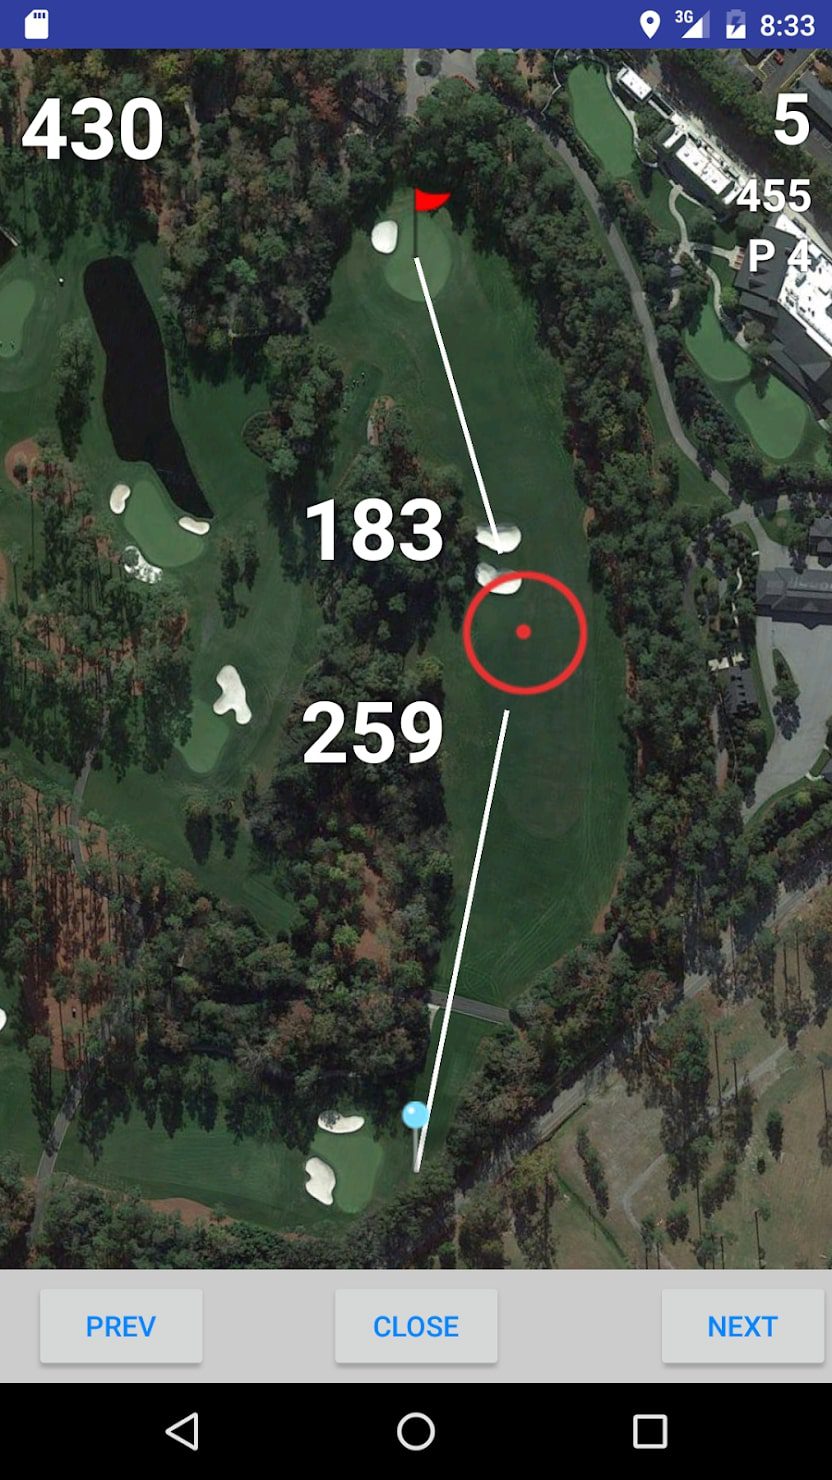 Golf-GPS-Range-Finder-screen-1